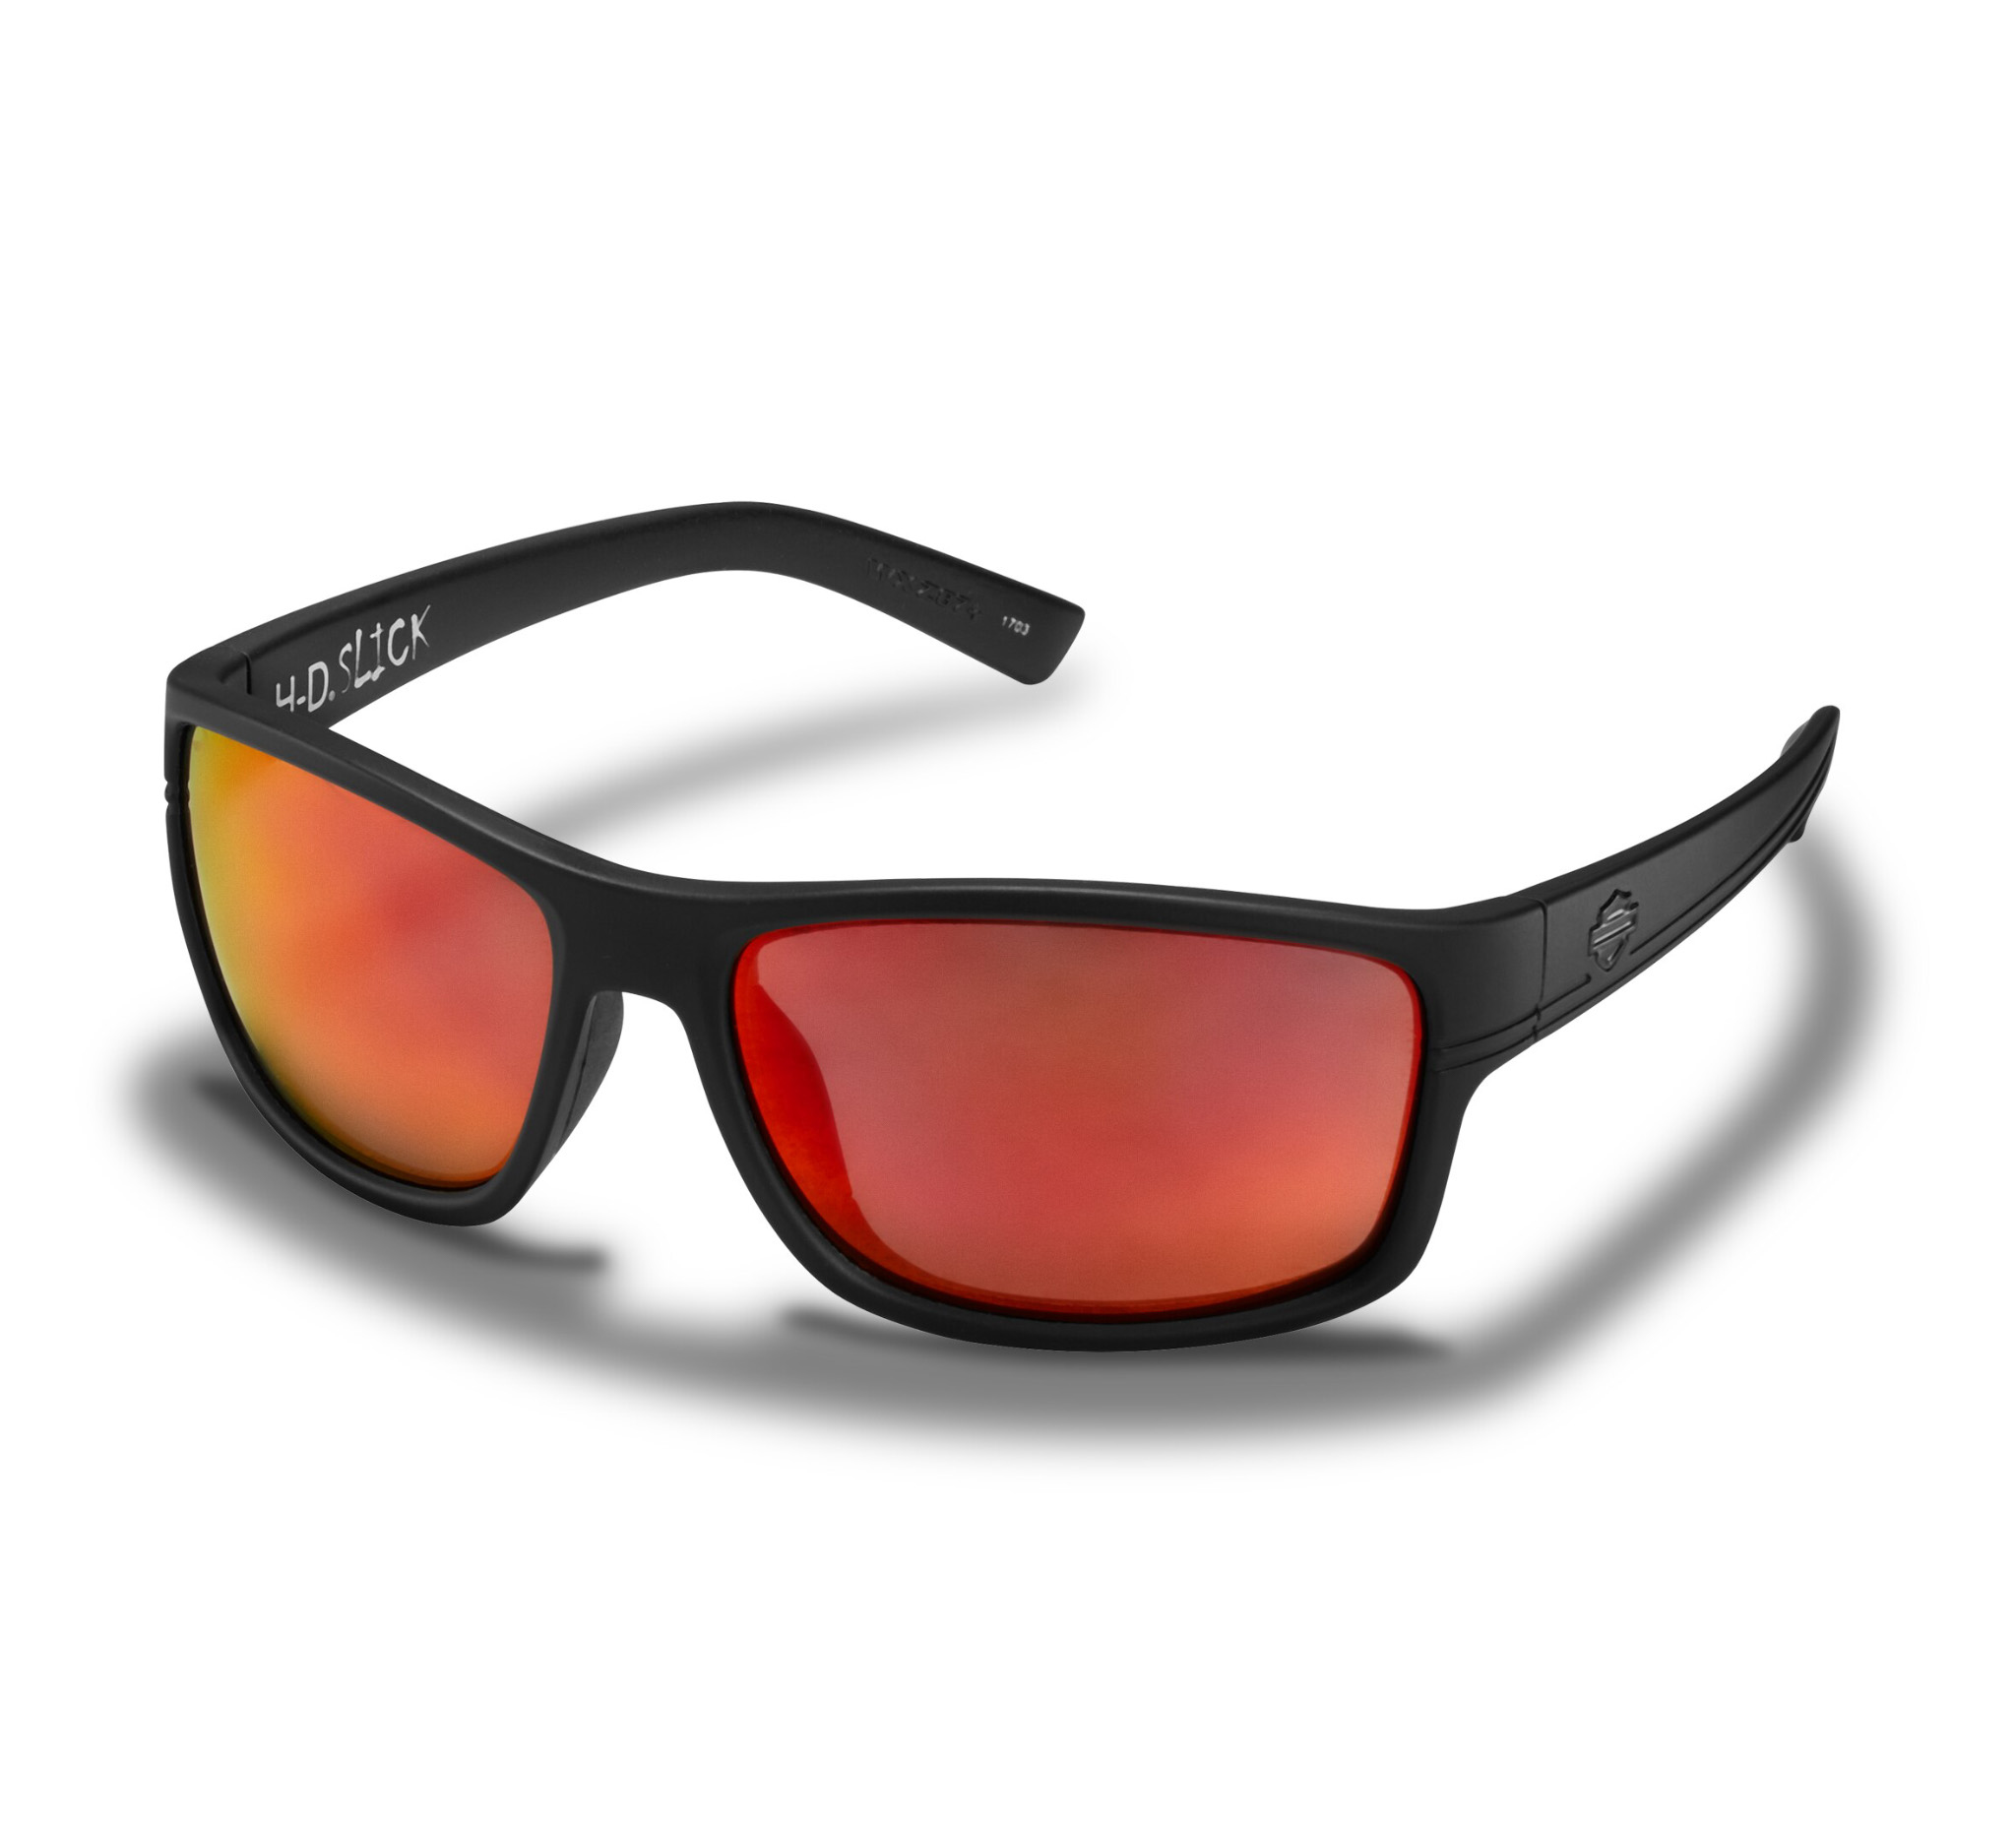 Harley-Davidson Womens Sun Bling H-D Ruddy Red Frames Sunglasses HDS8002RD-3F 